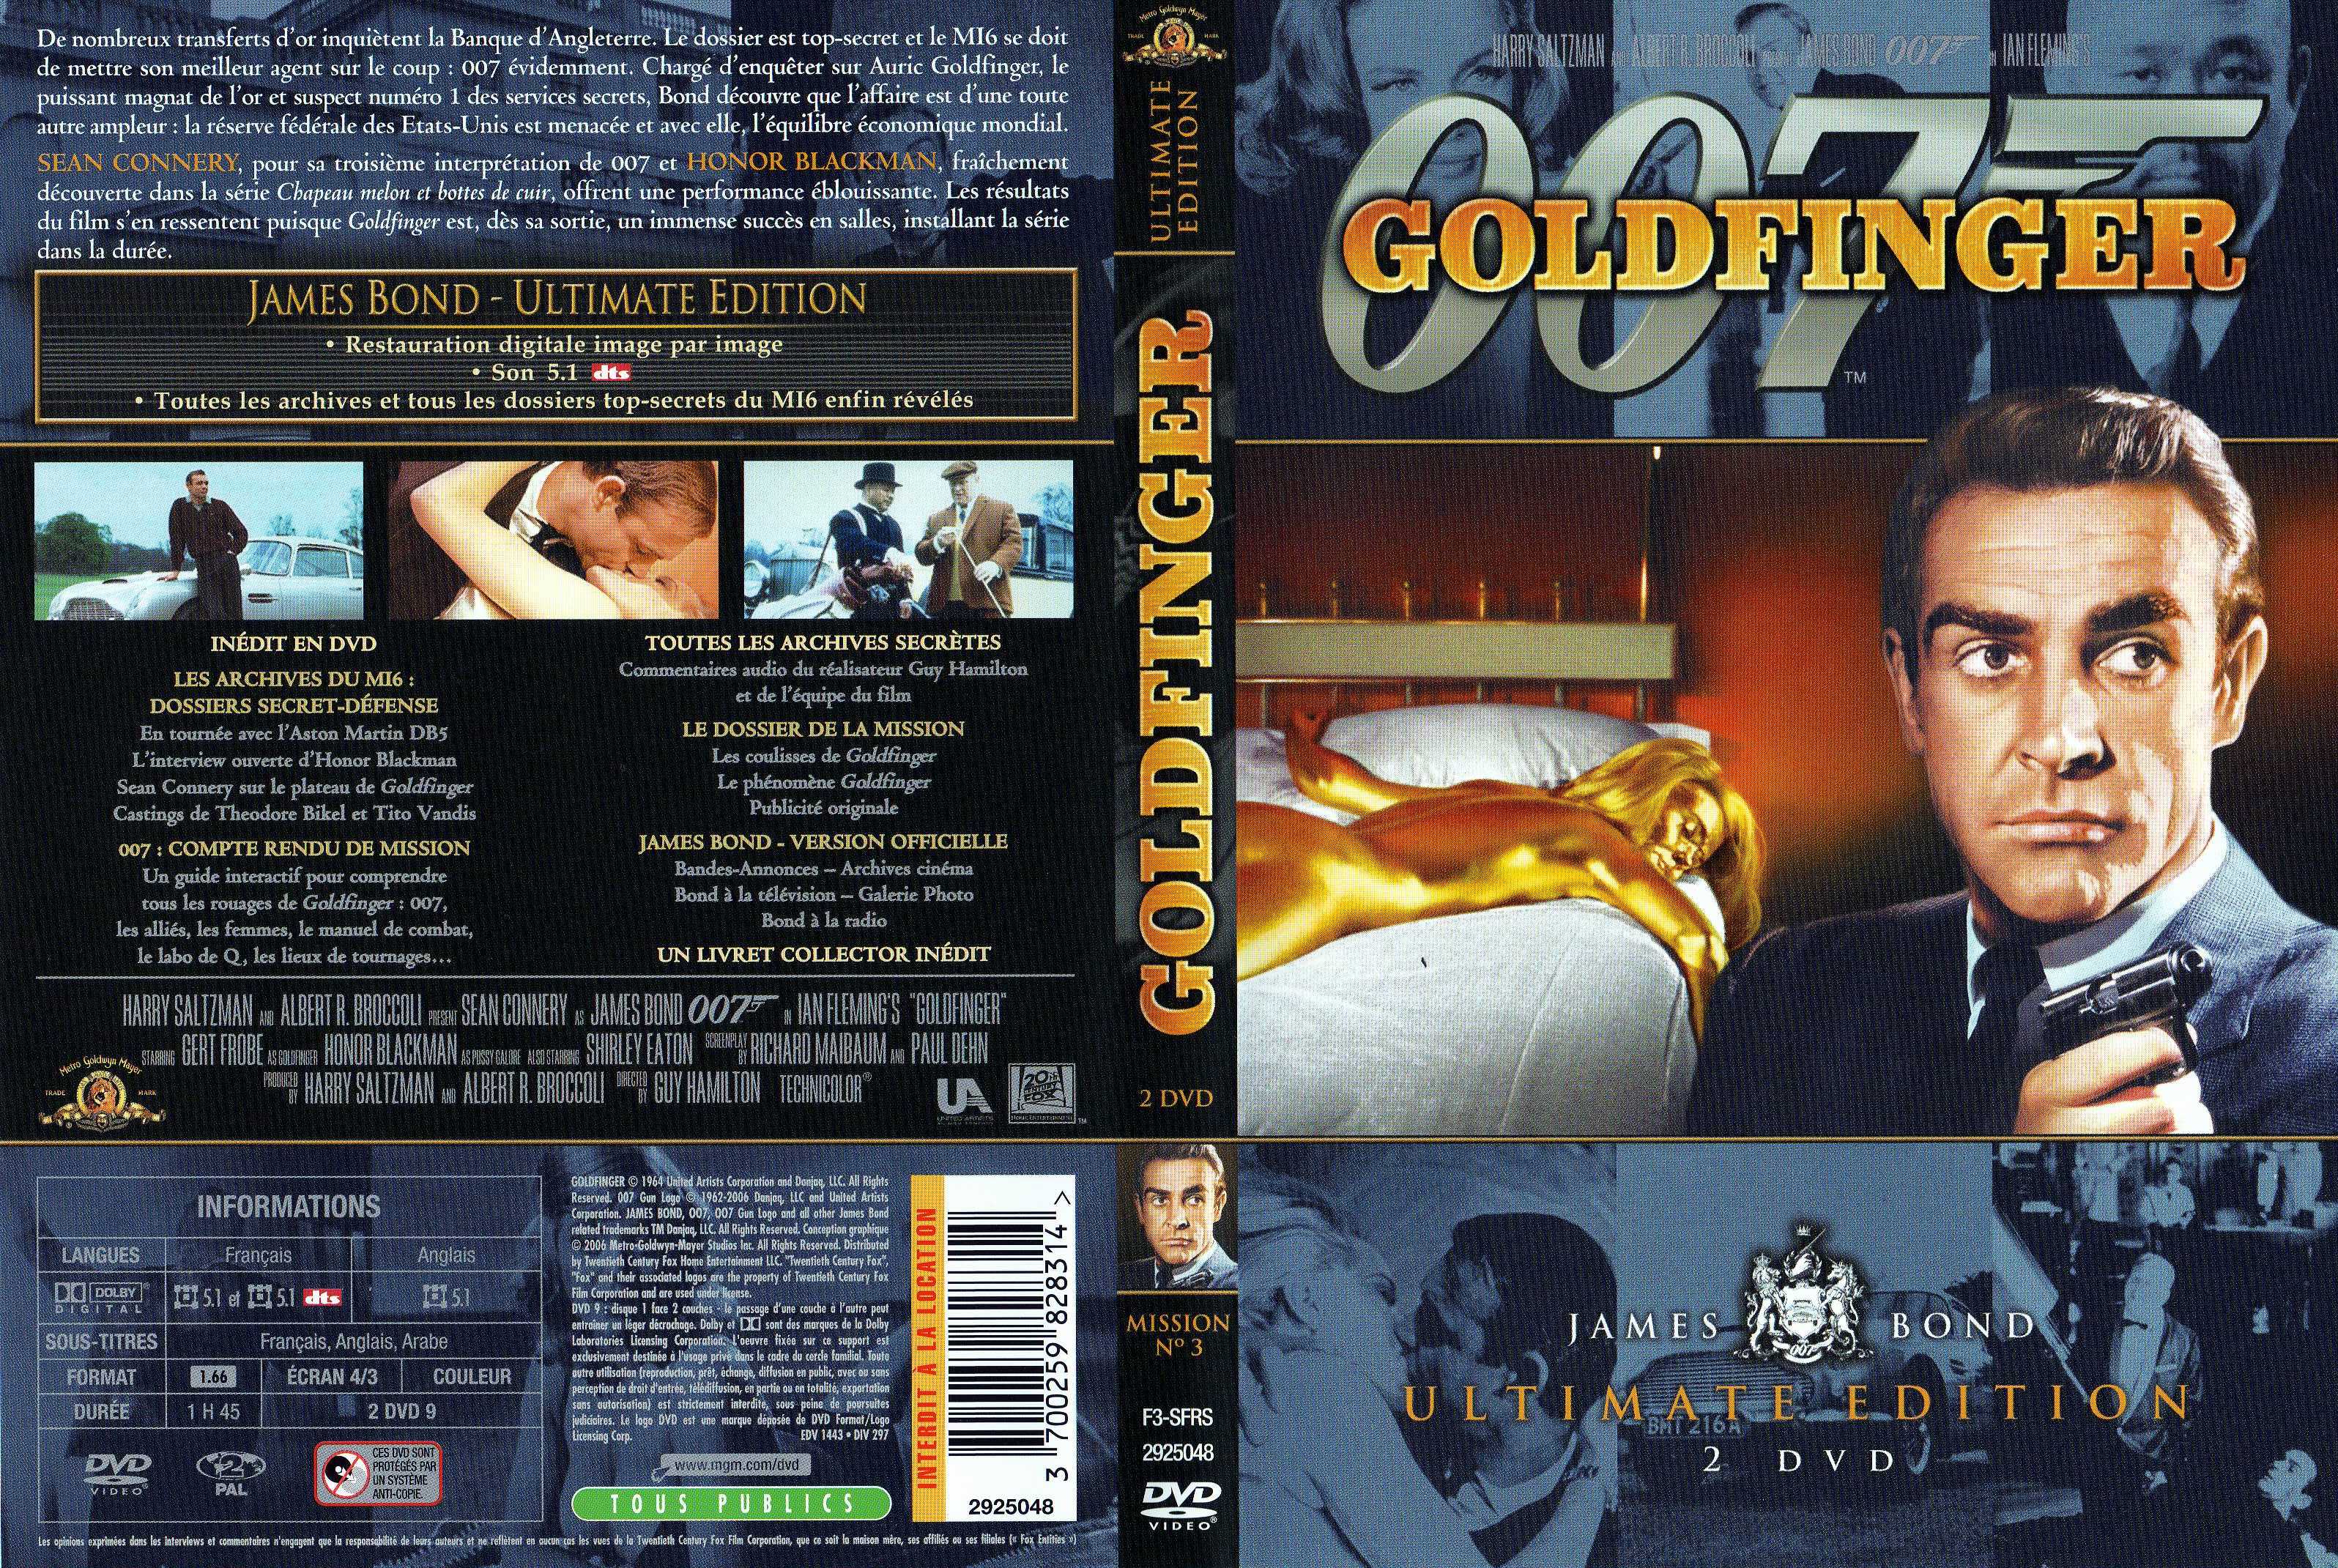 Jaquette DVD James Bond 007 Goldfinger Ultimate Edition